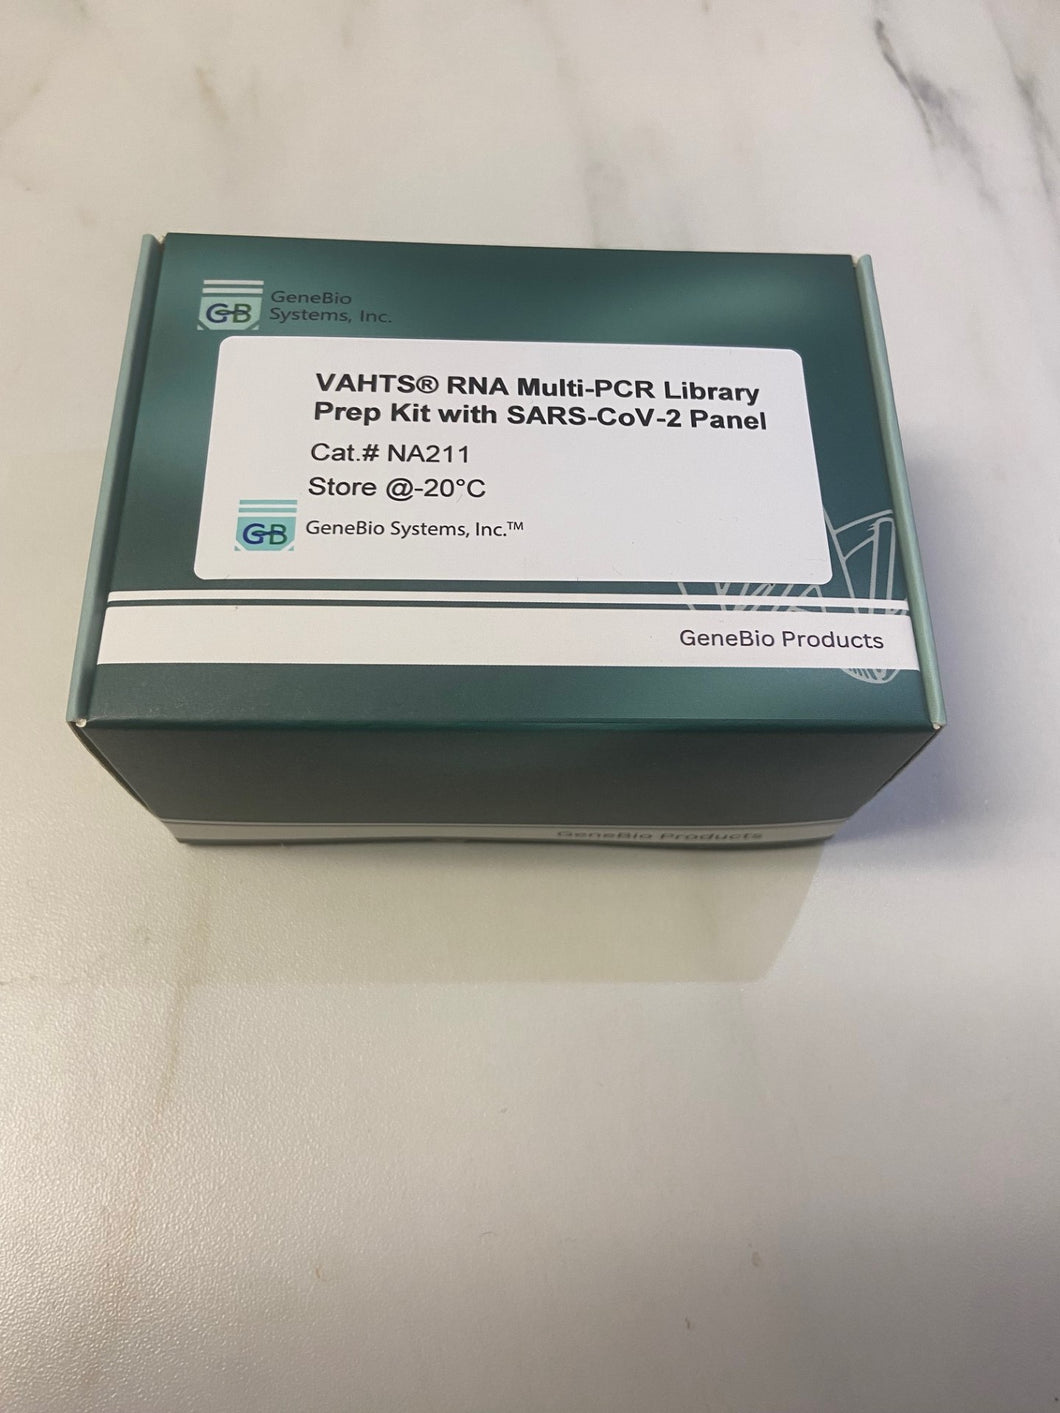 VAHTS® RNA Multi-PCR Library Prep Kit with SARS-CoV-2 Panel